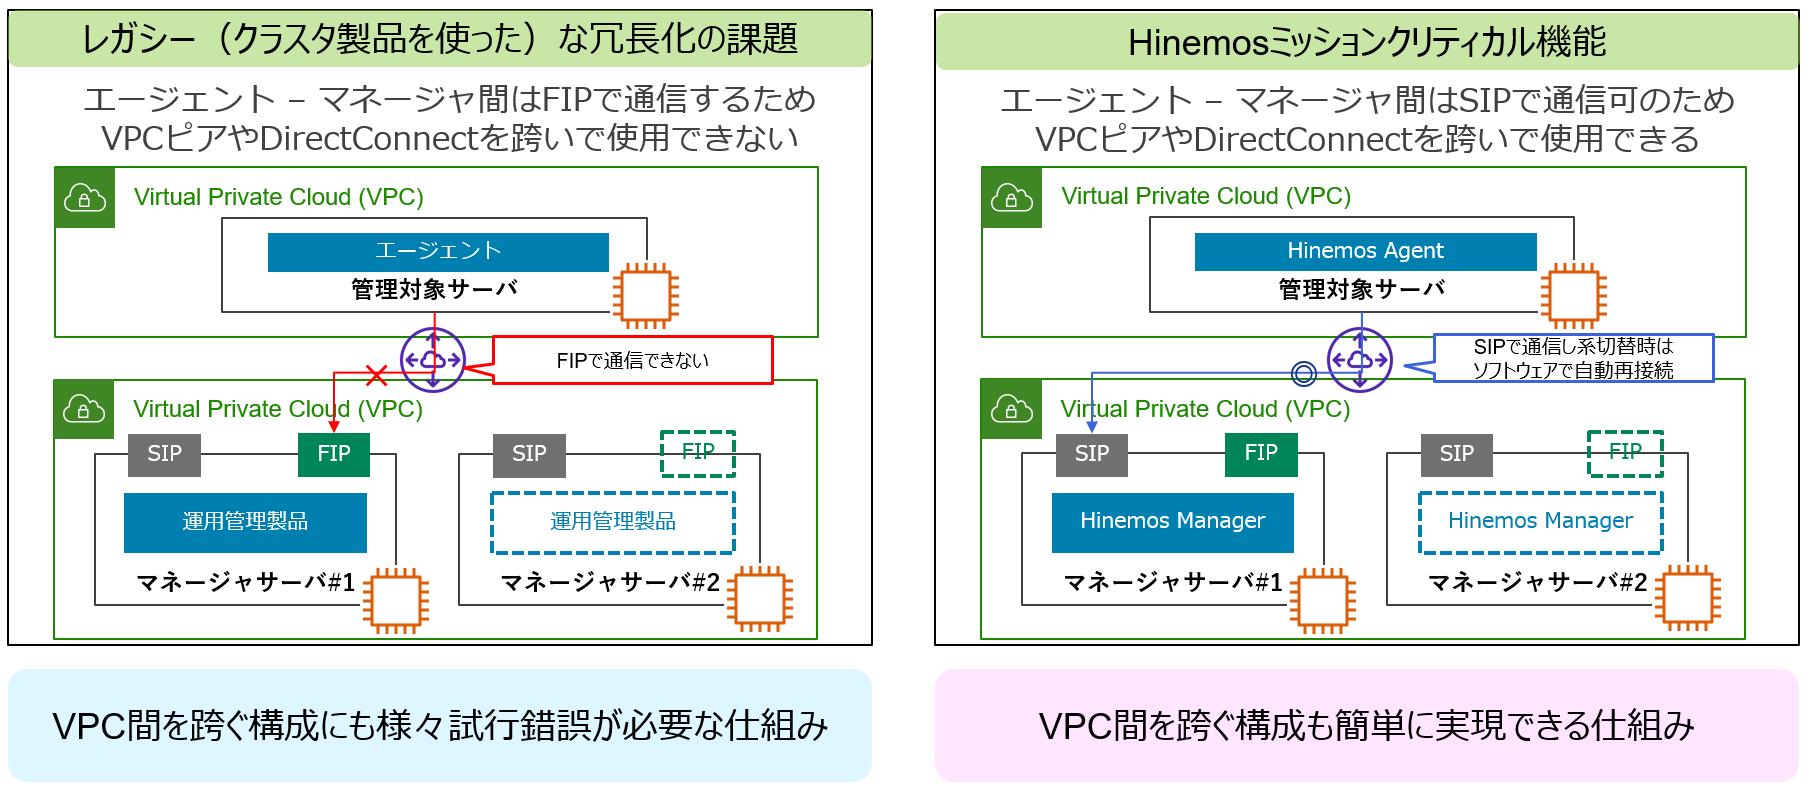 VPCピア対応/DirectConnect対応について